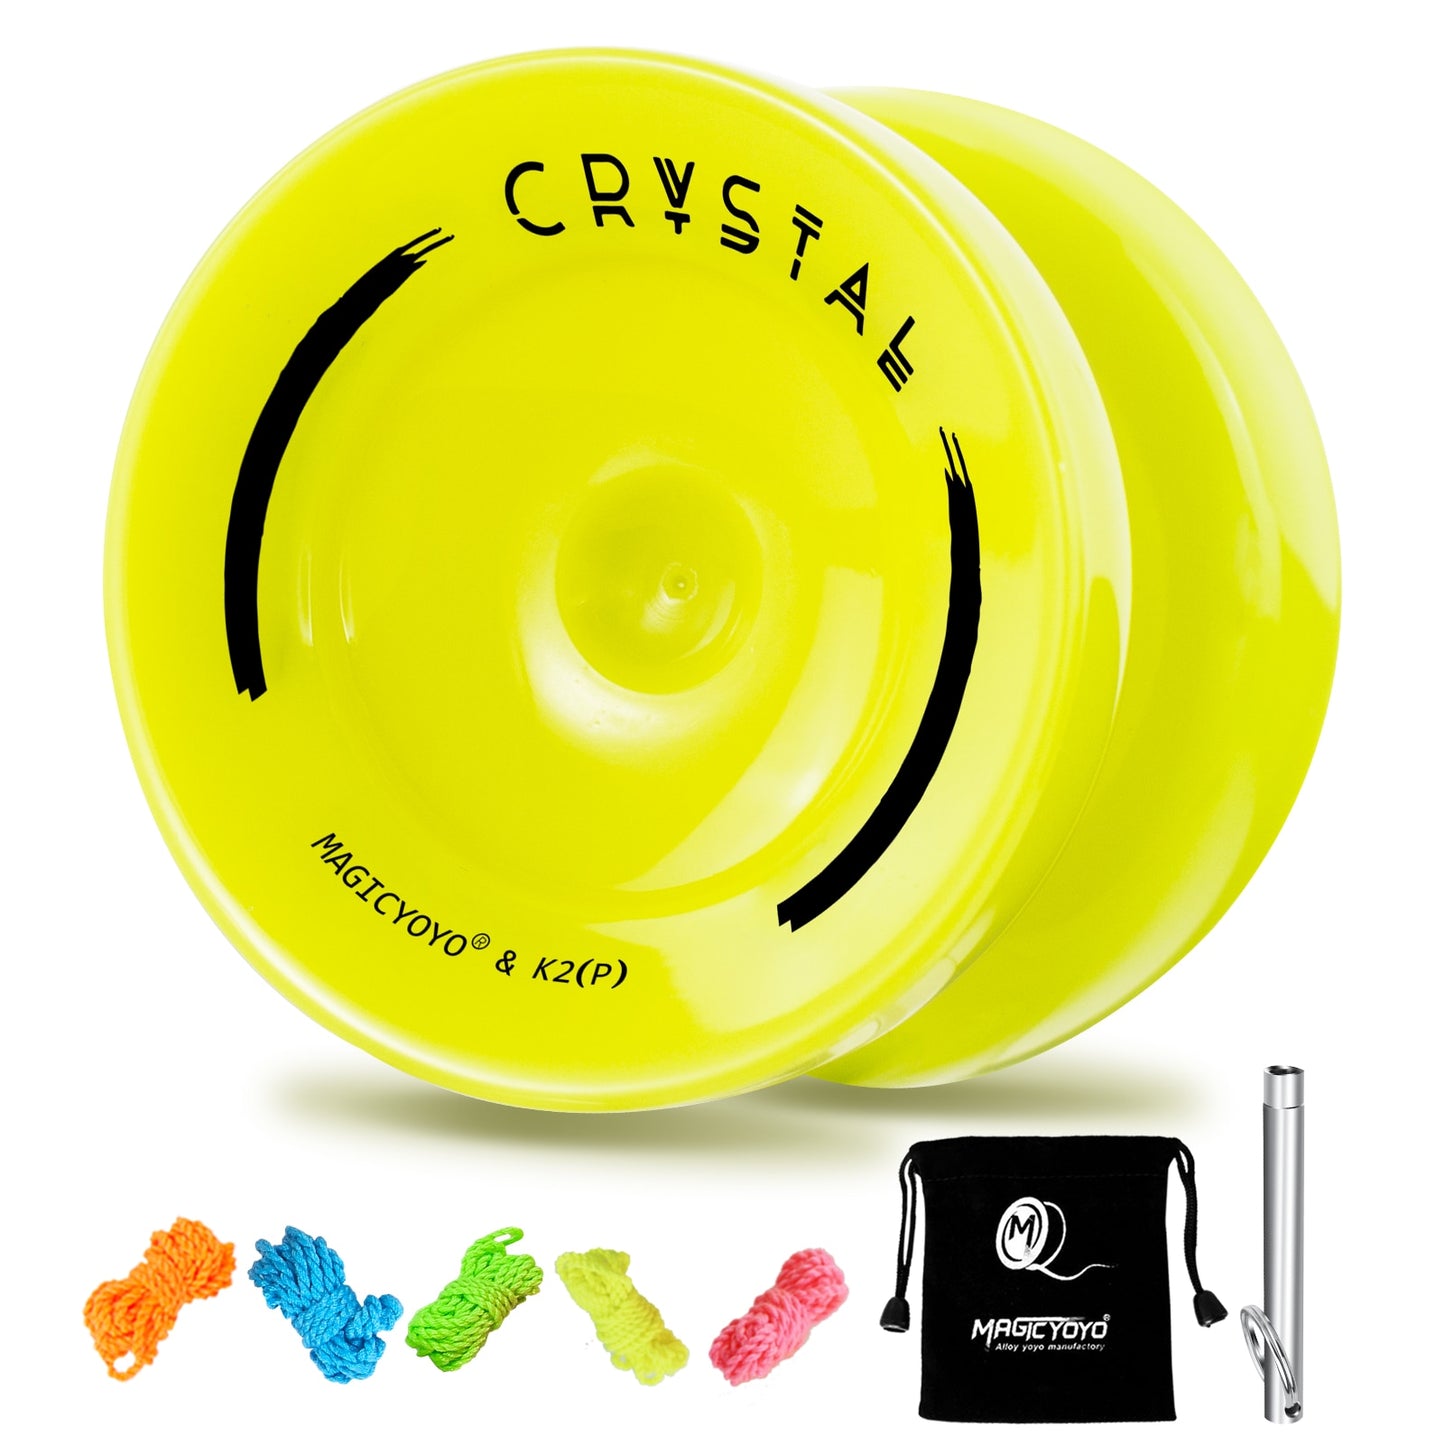 MAGICYOYO K2 CRYSTAL Yoyo , Dual Purpose Responsive Yo-Yo for Beginner, Replacement Unresponsive Bearing for Advanced